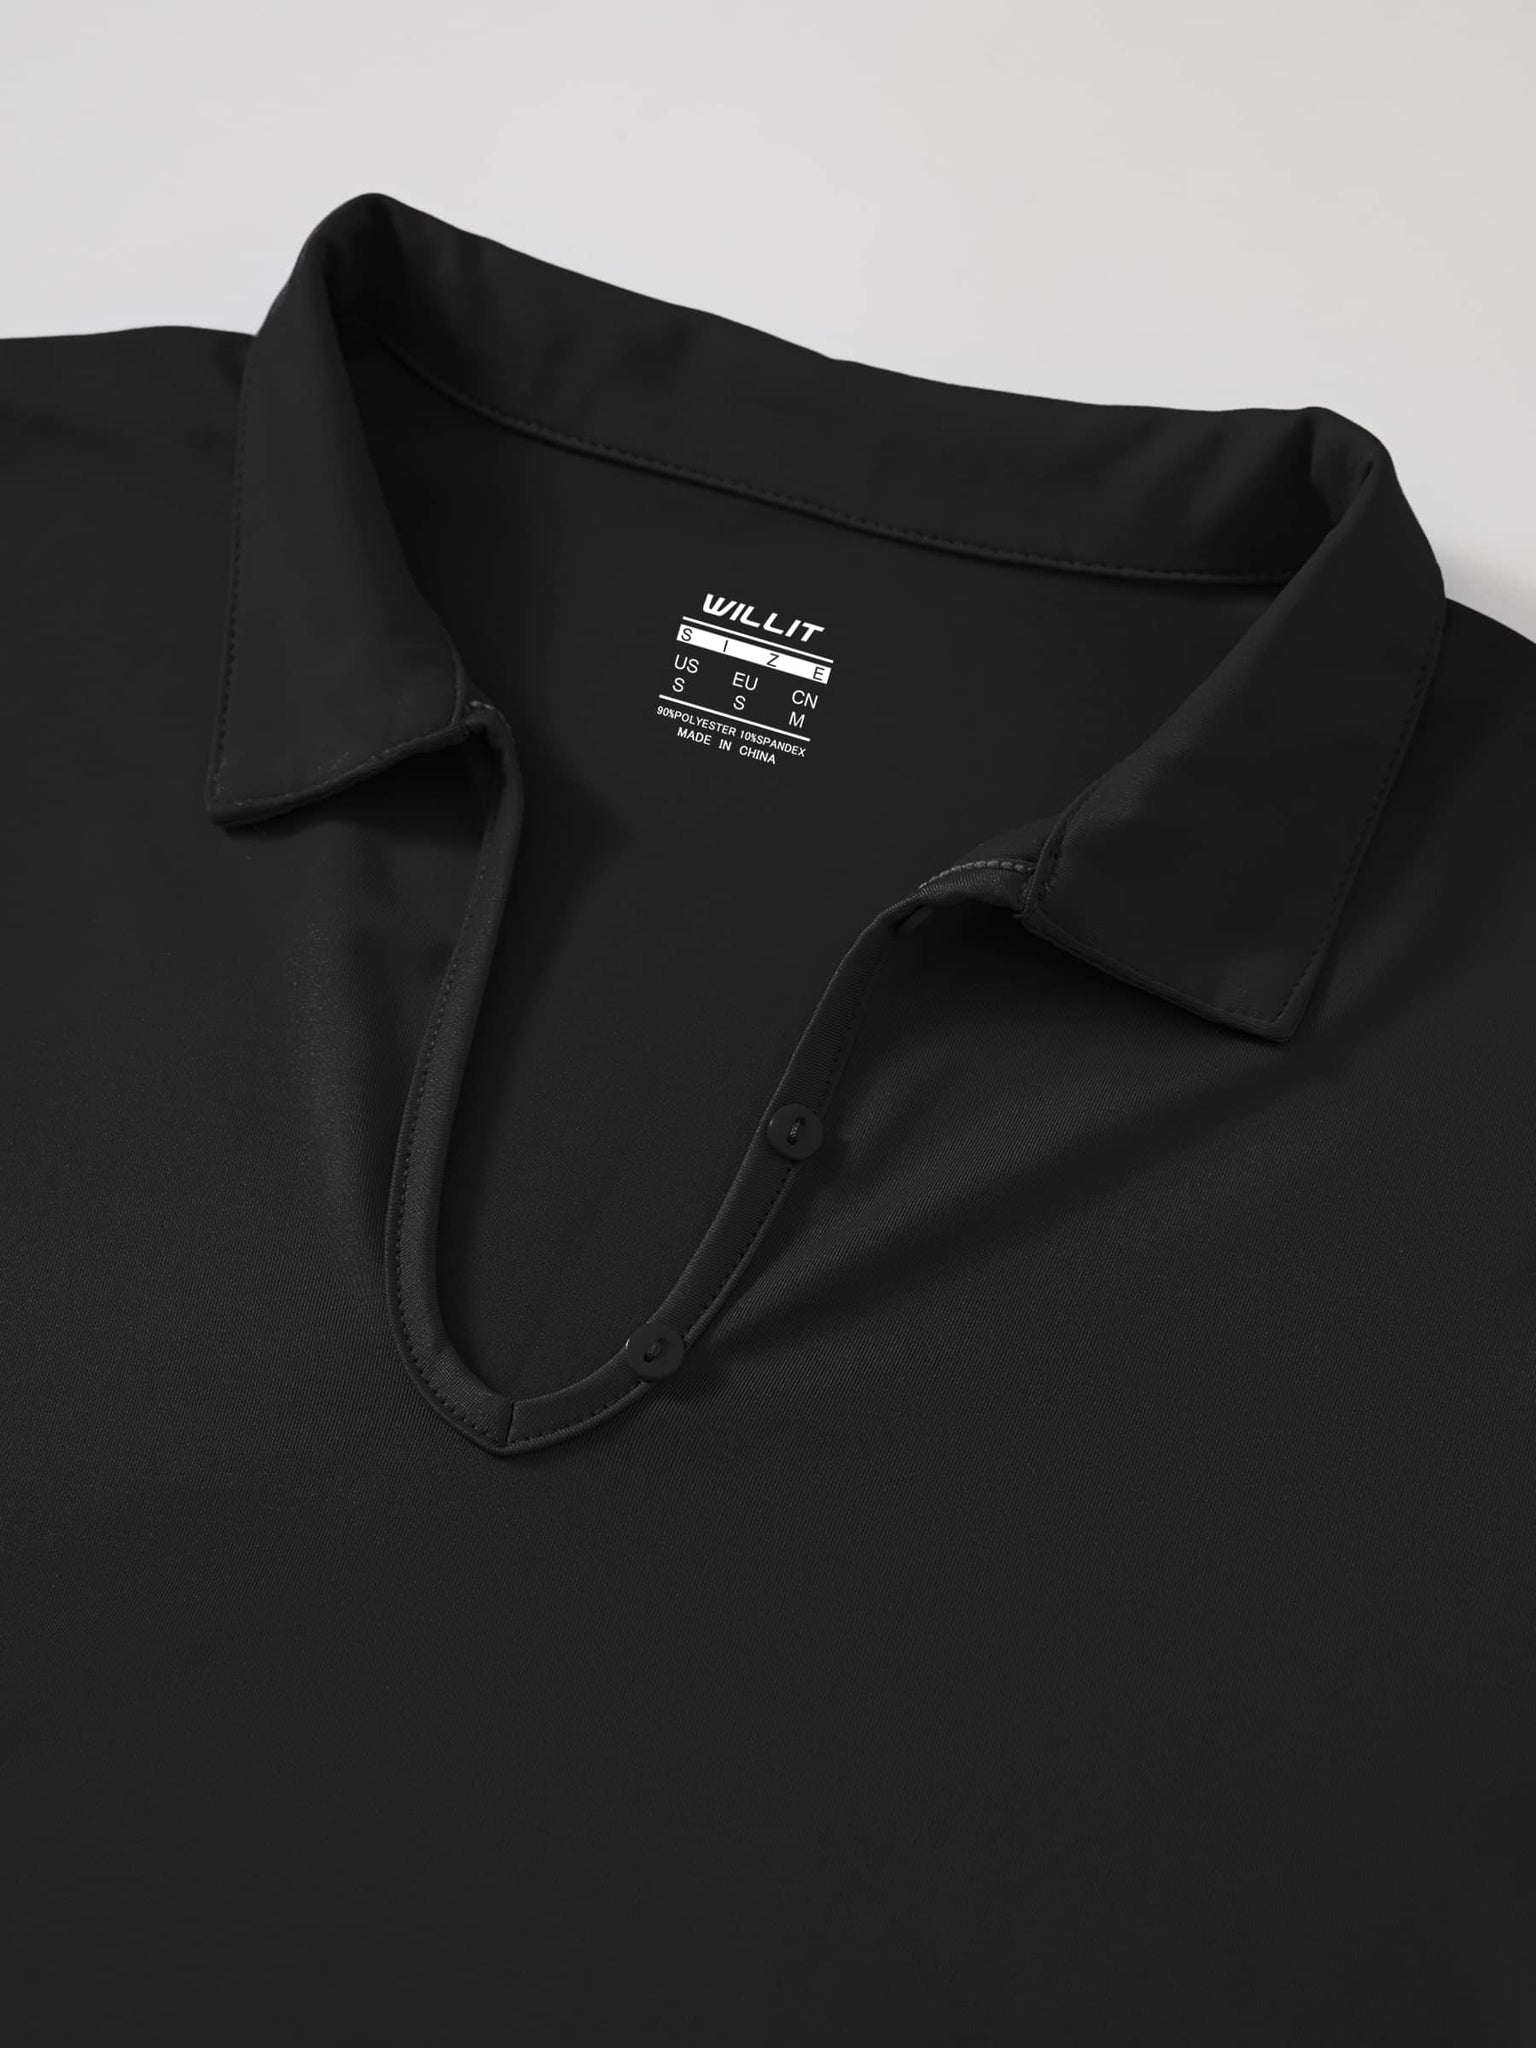 Willit Women's Golf Polo Short Sleeve Shirts_Black4